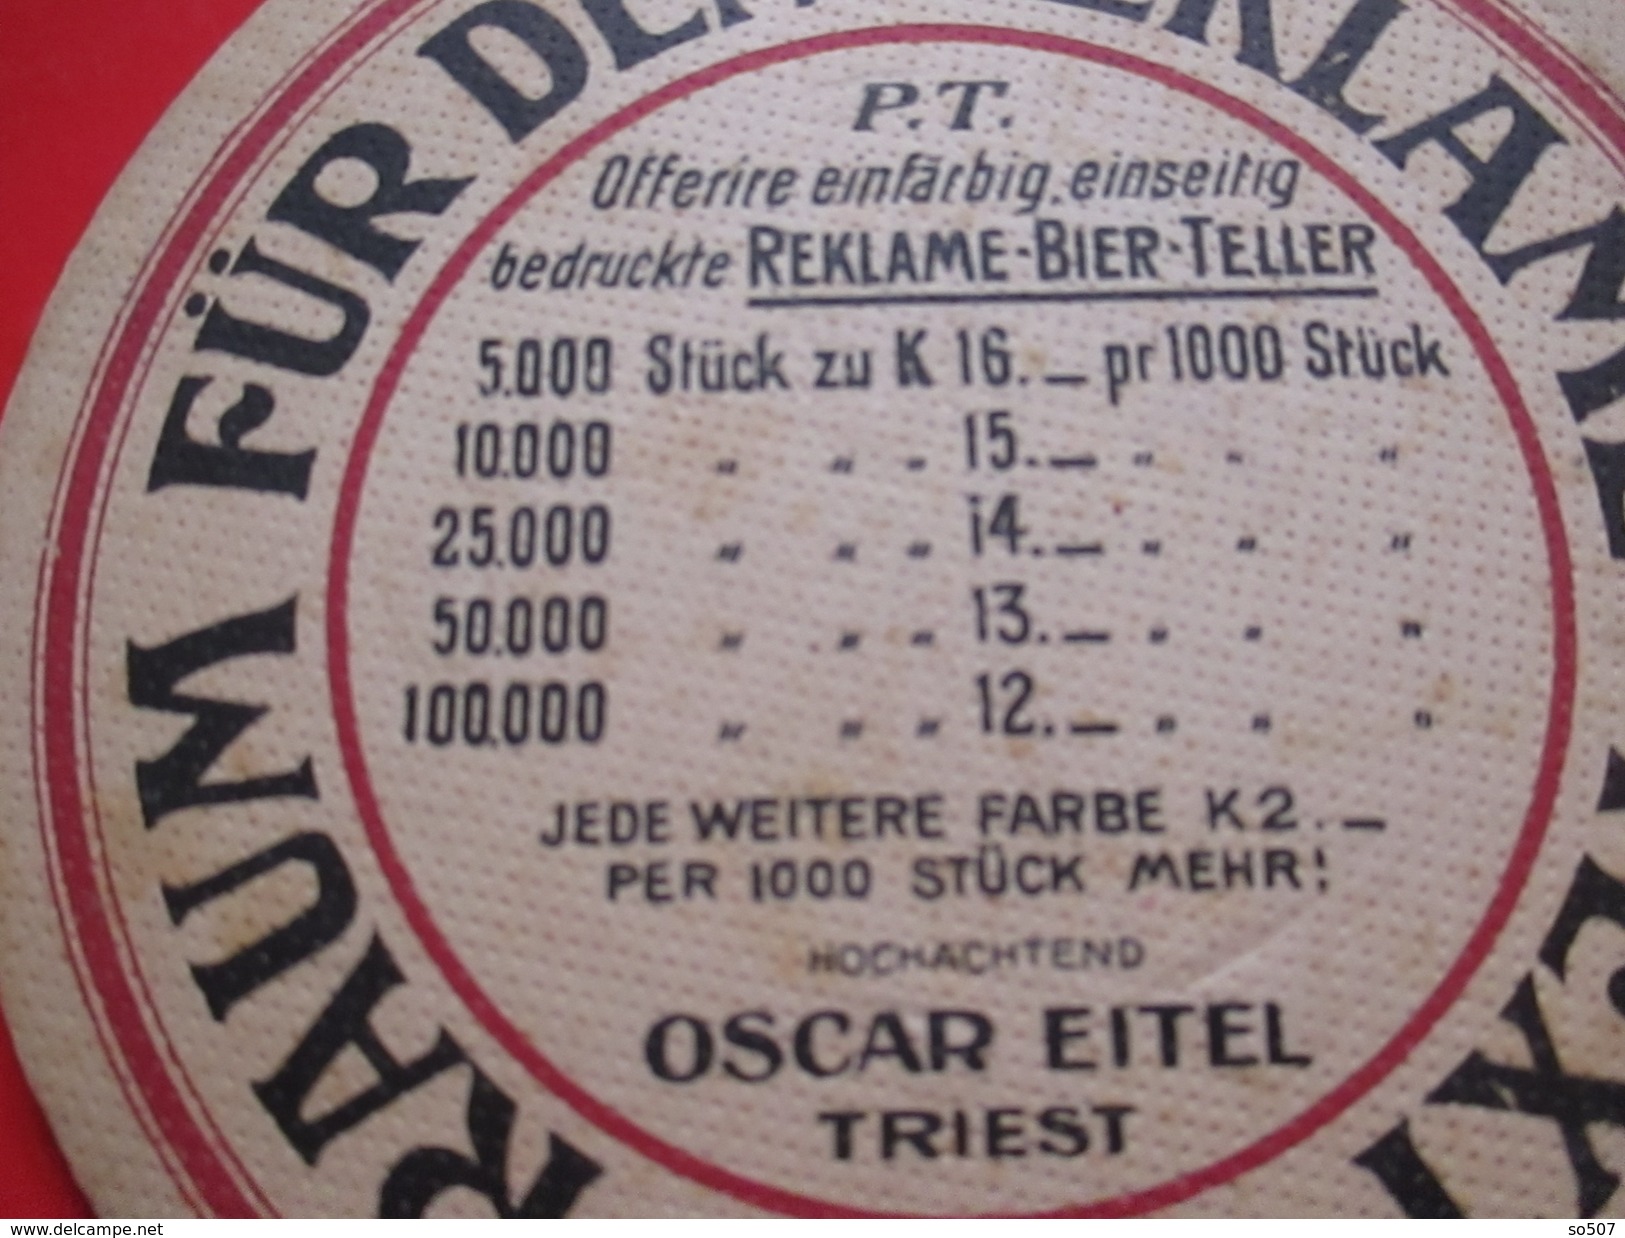 Old Advertisement Mat, Coaster, Bier, Beer, Oscar Eitel - Triest, Italy - Portavasos